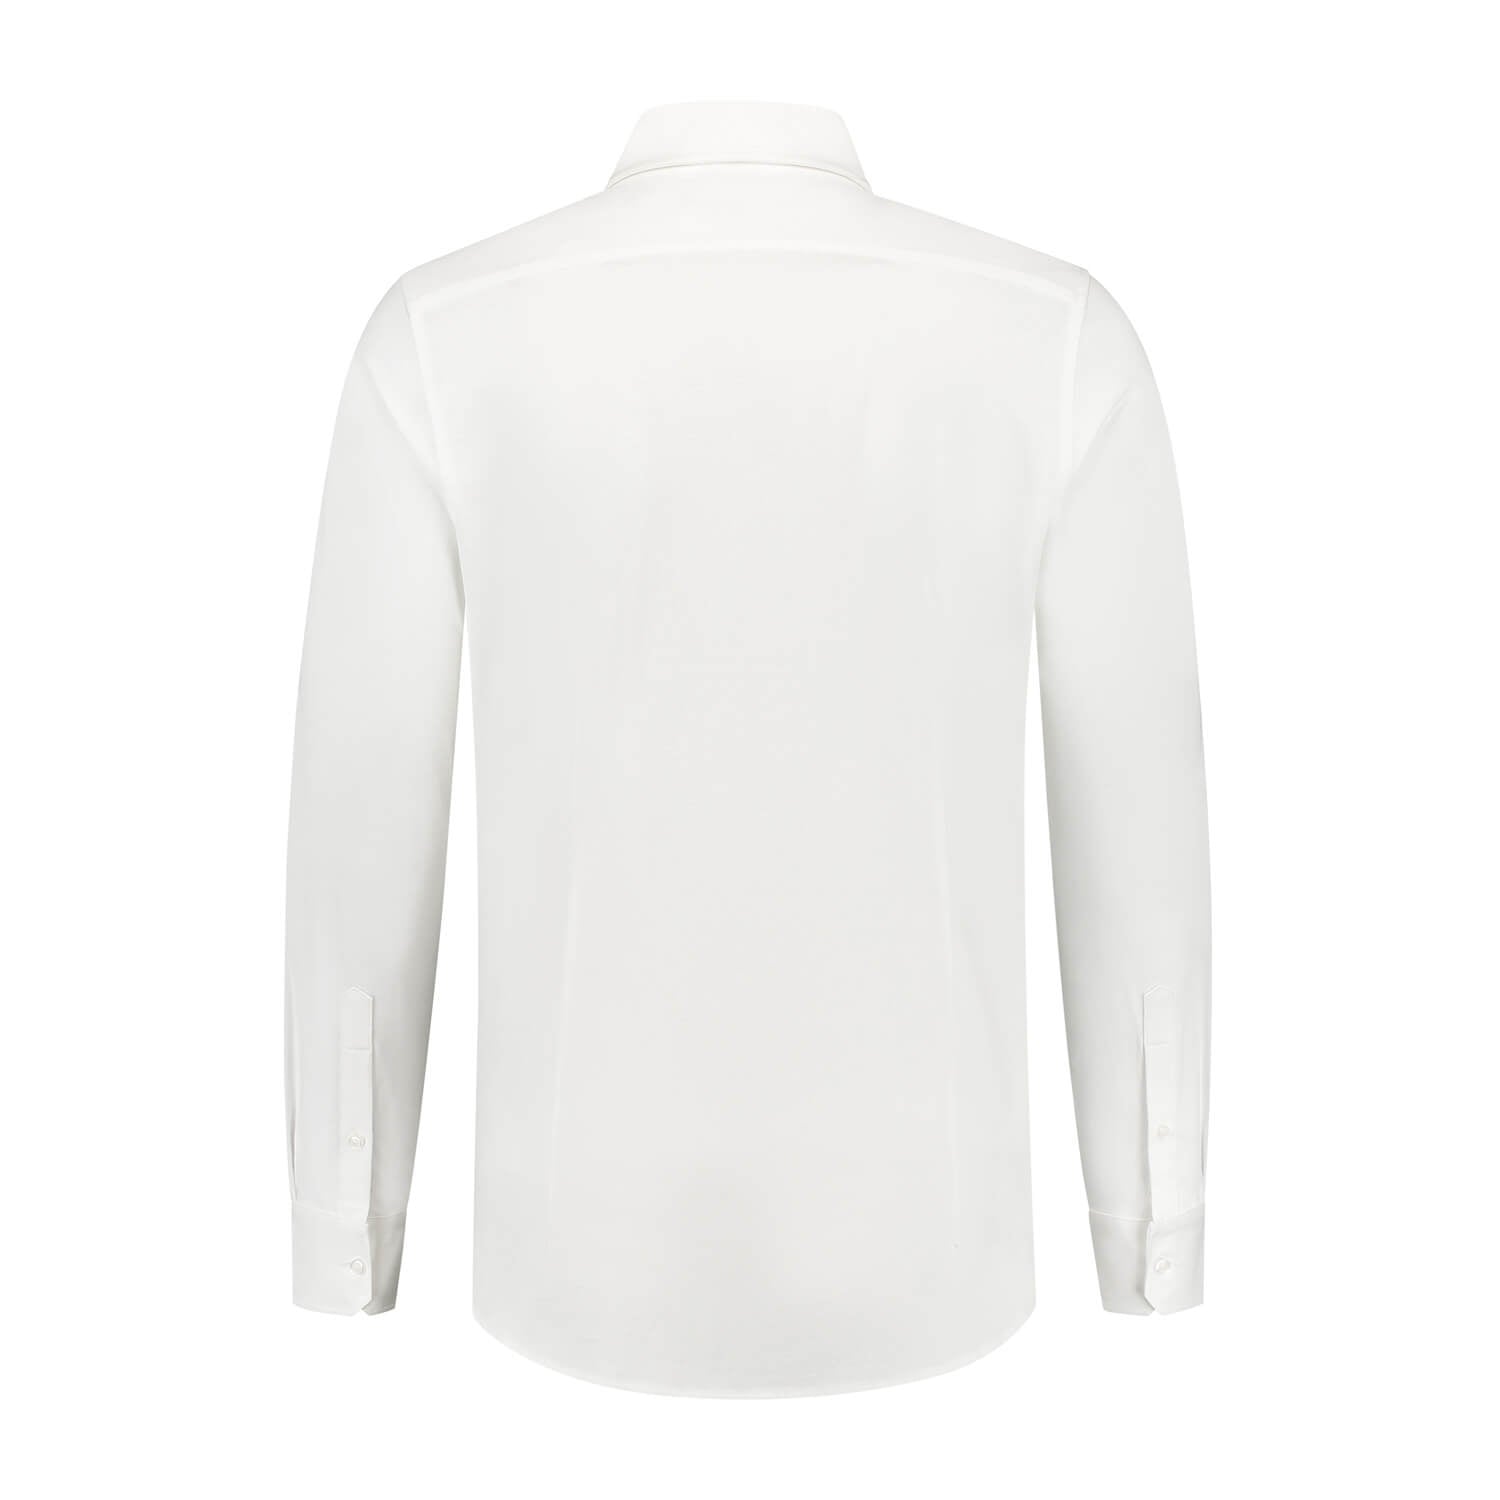 Stretch shirt white